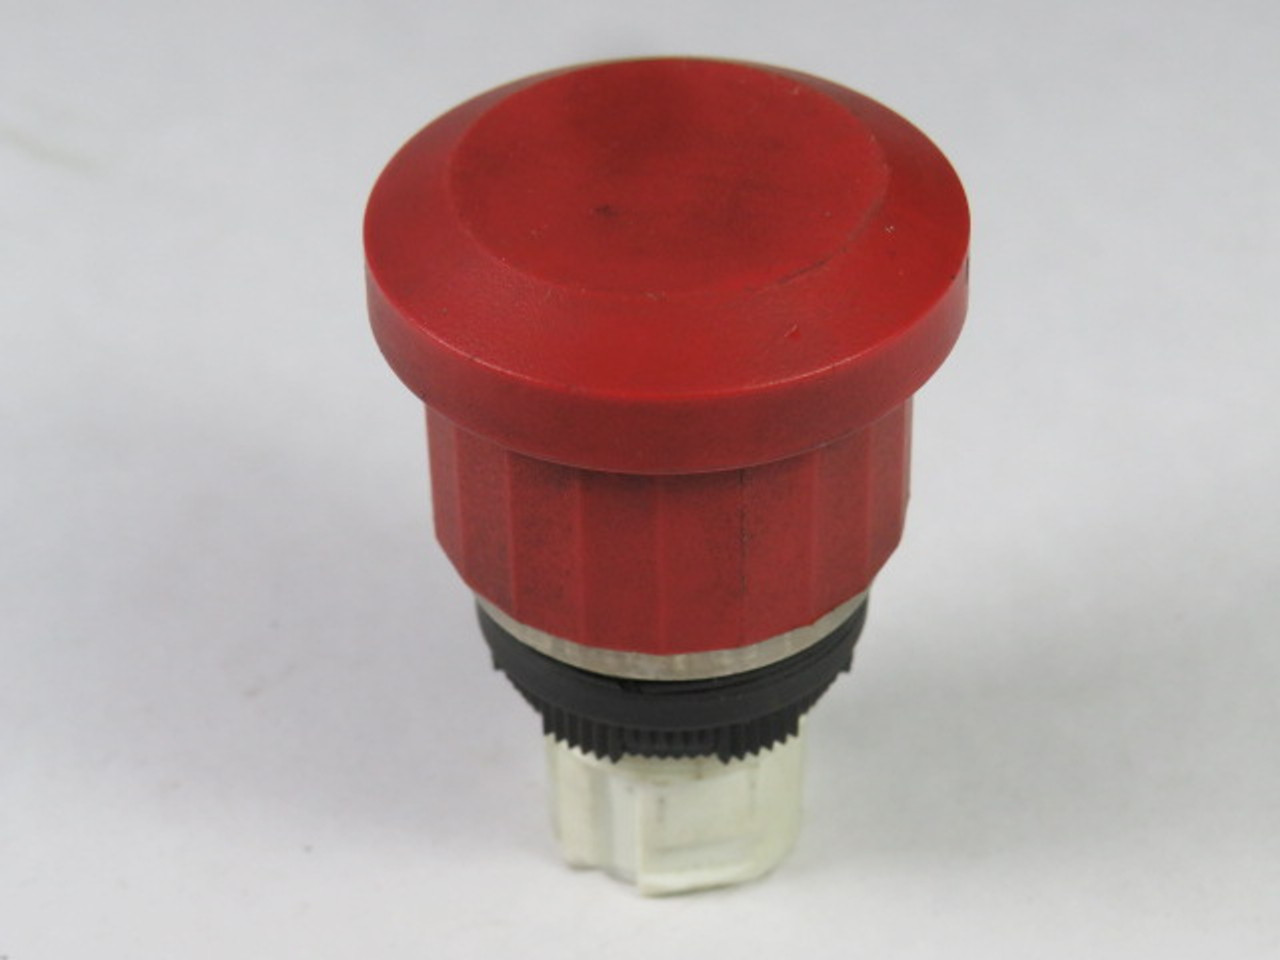 Allen-Bradley 800ES-MP24 2-Position Push-Pull Device Red Mushroom Cap USED